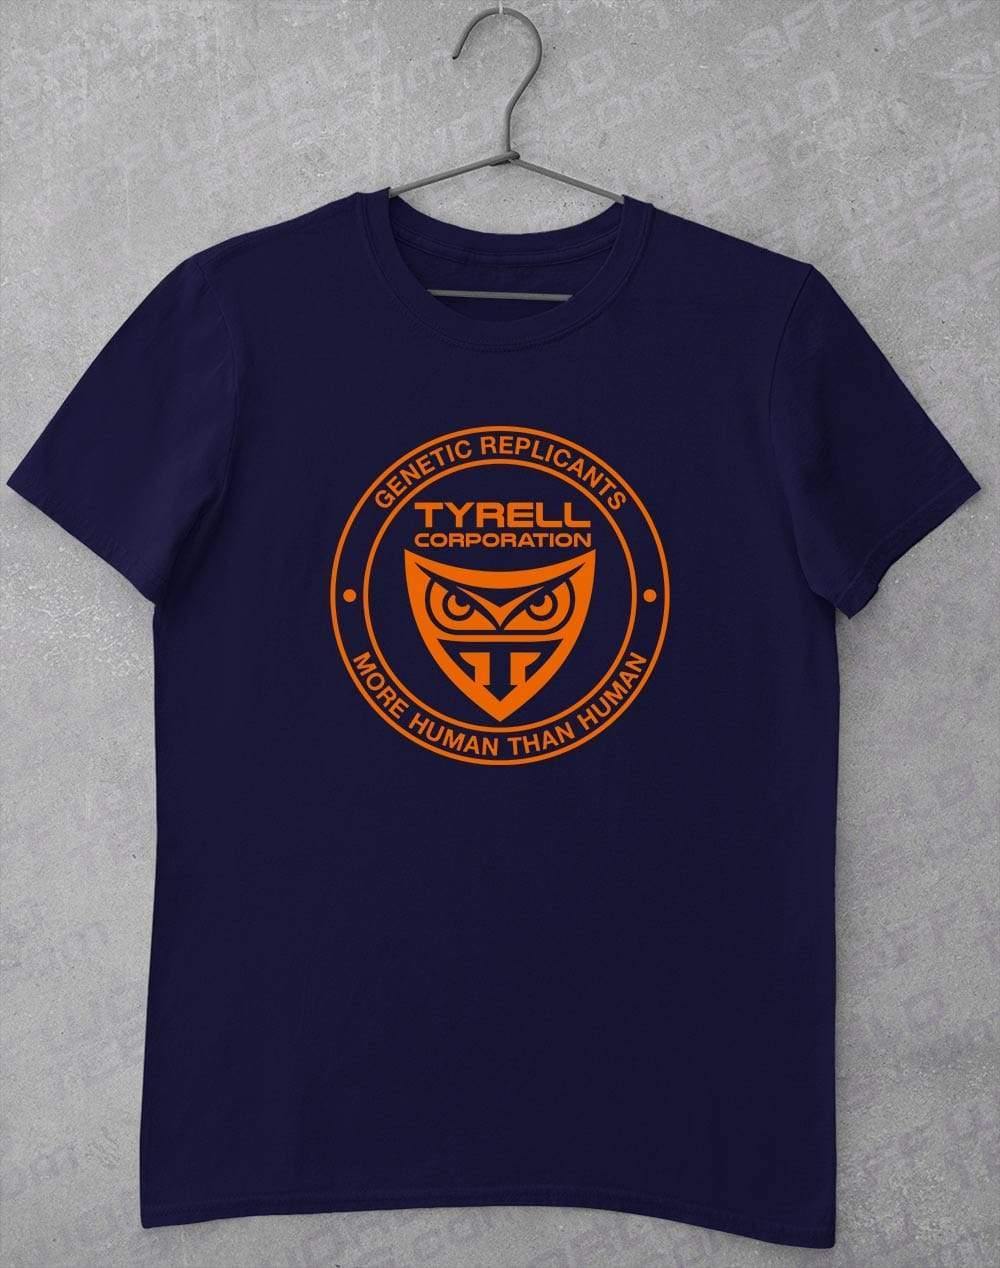 Tyrell Corp Circular T-Shirt S / Navy  - Off World Tees